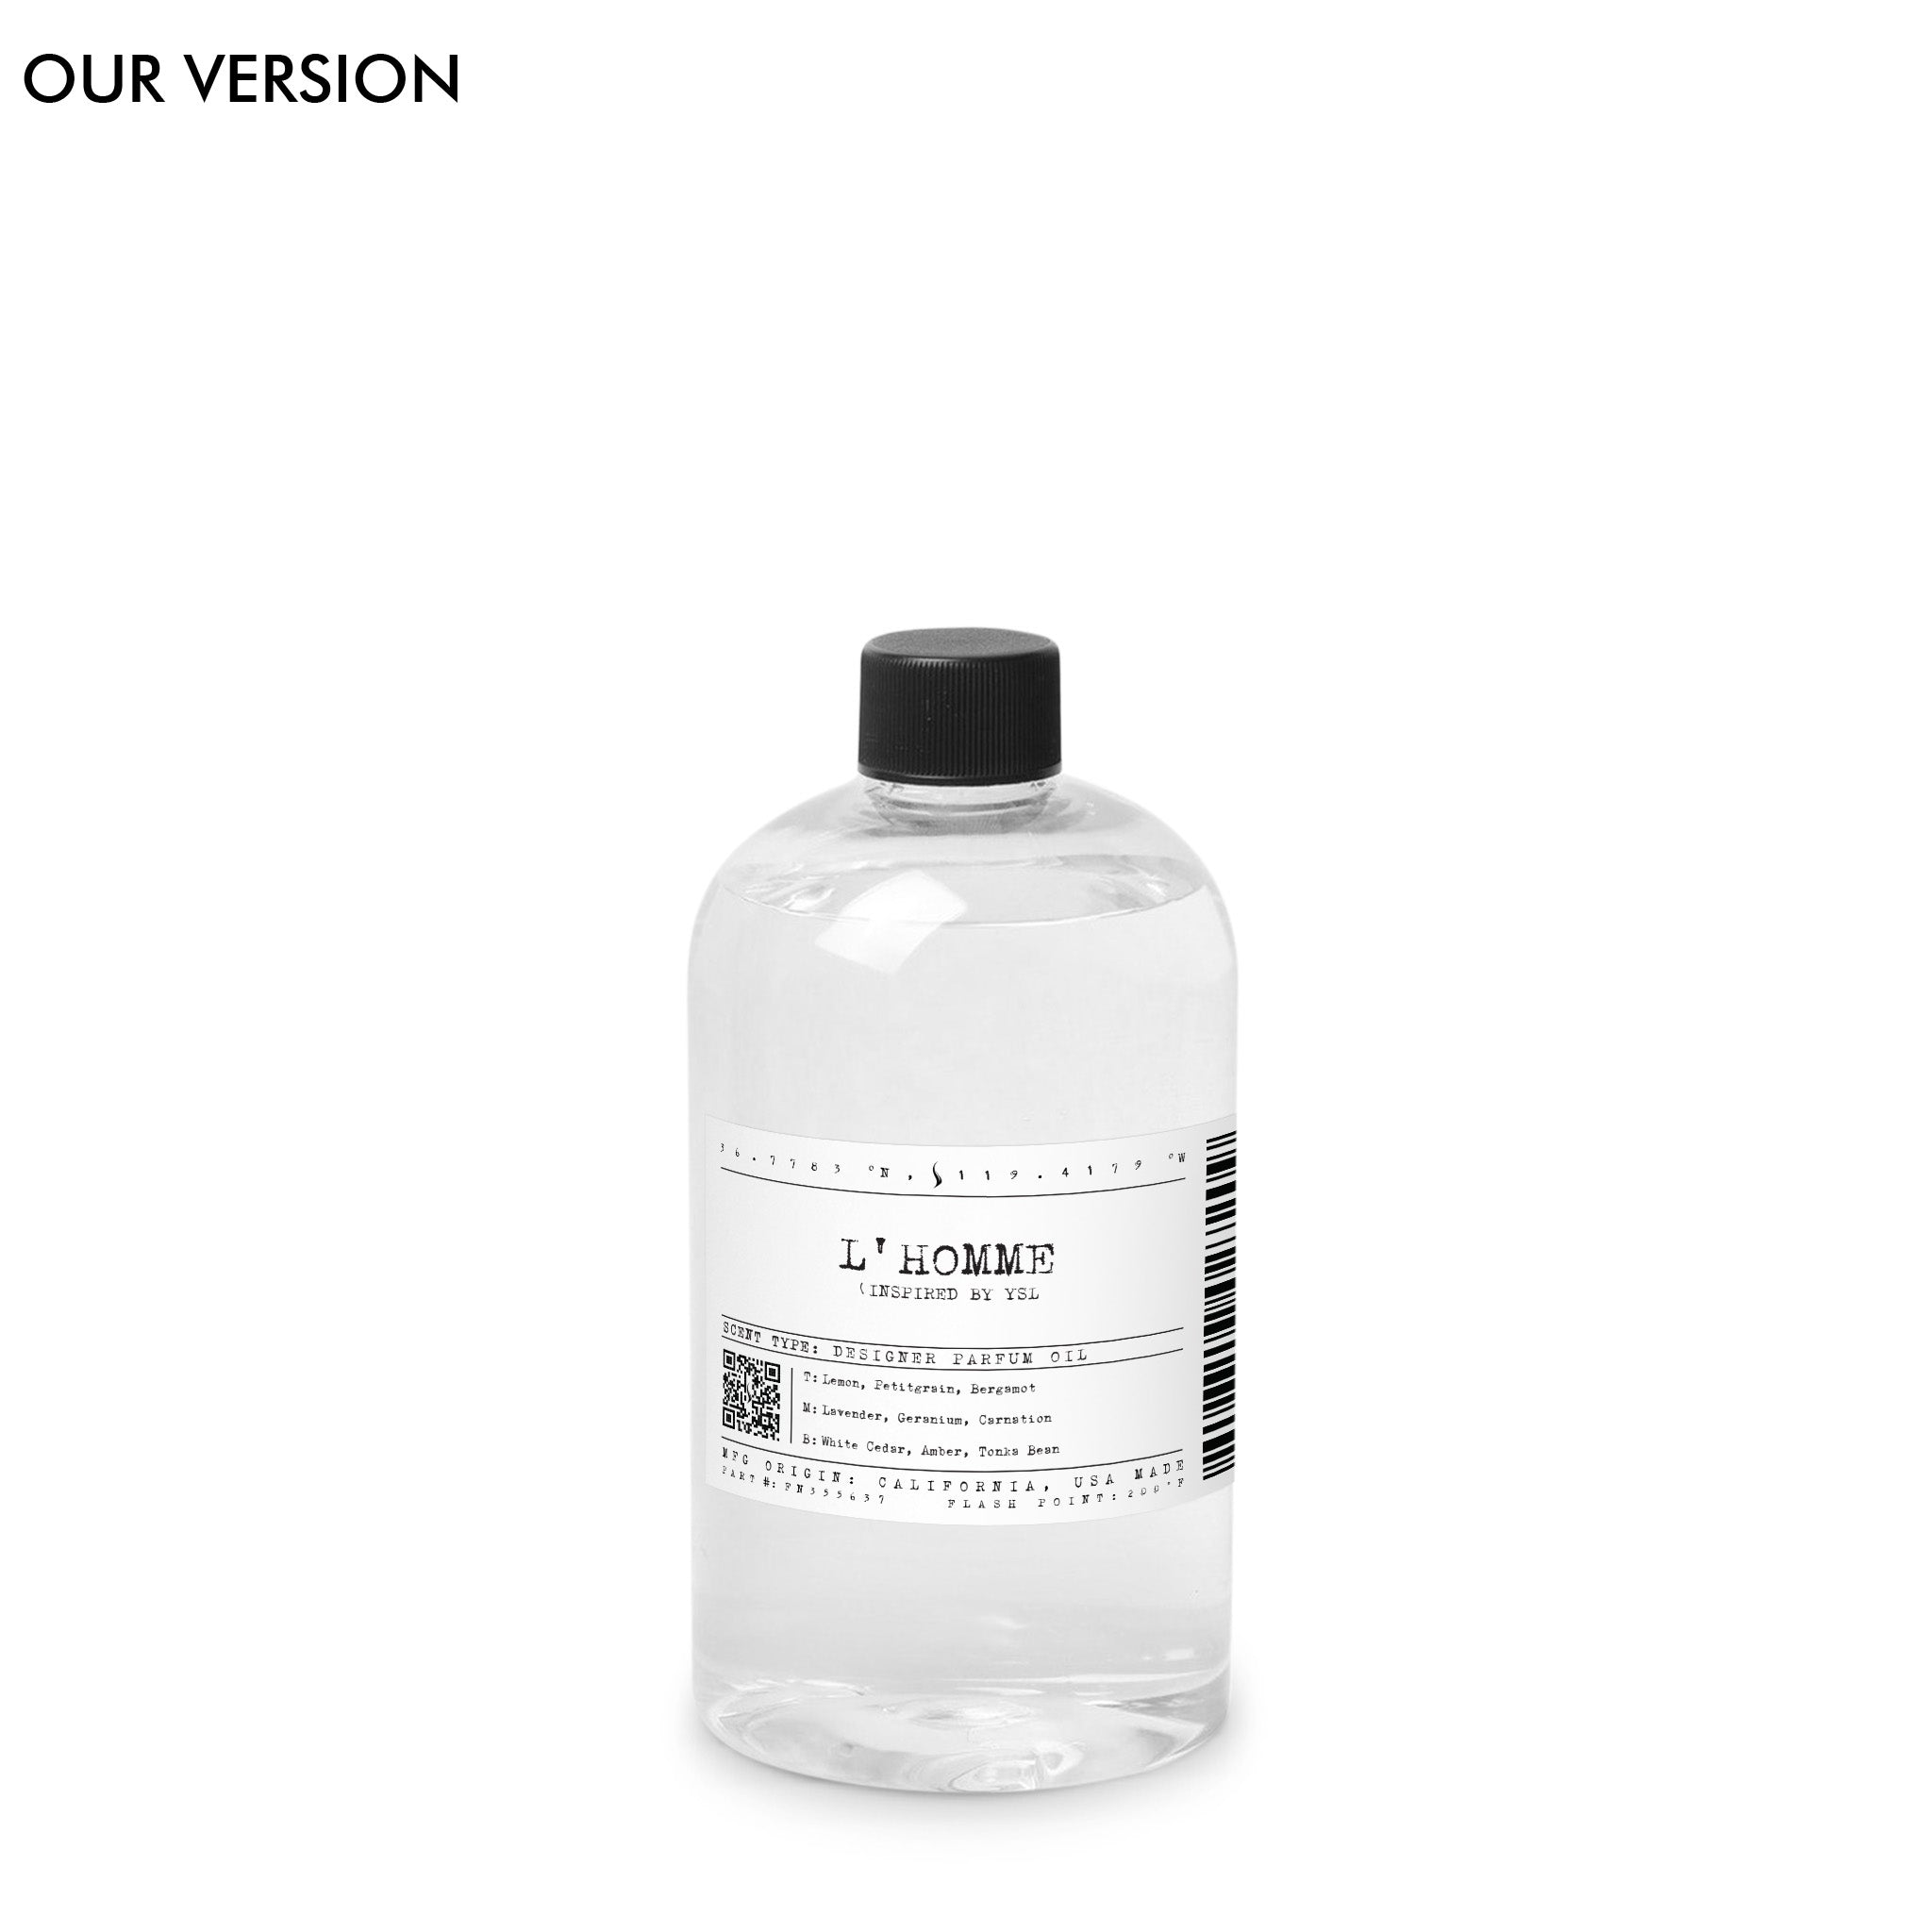 L'Homme (our version) Fragrance Oil